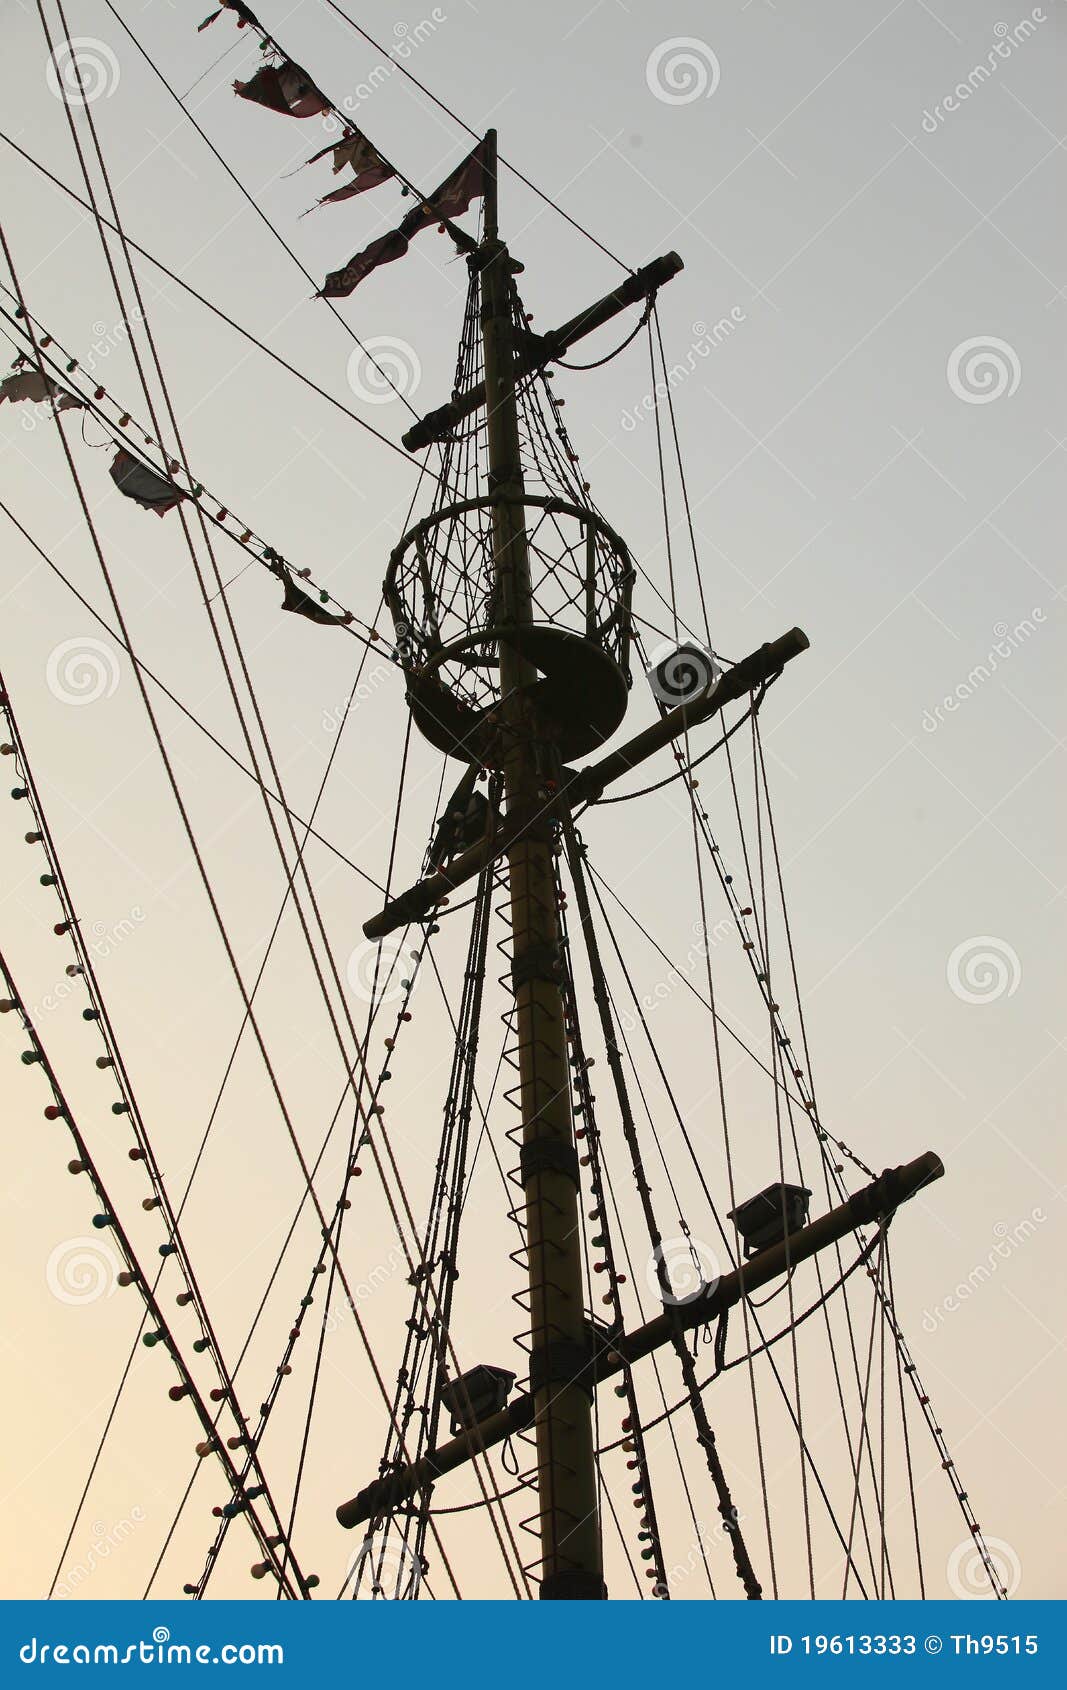 mast of the vessel